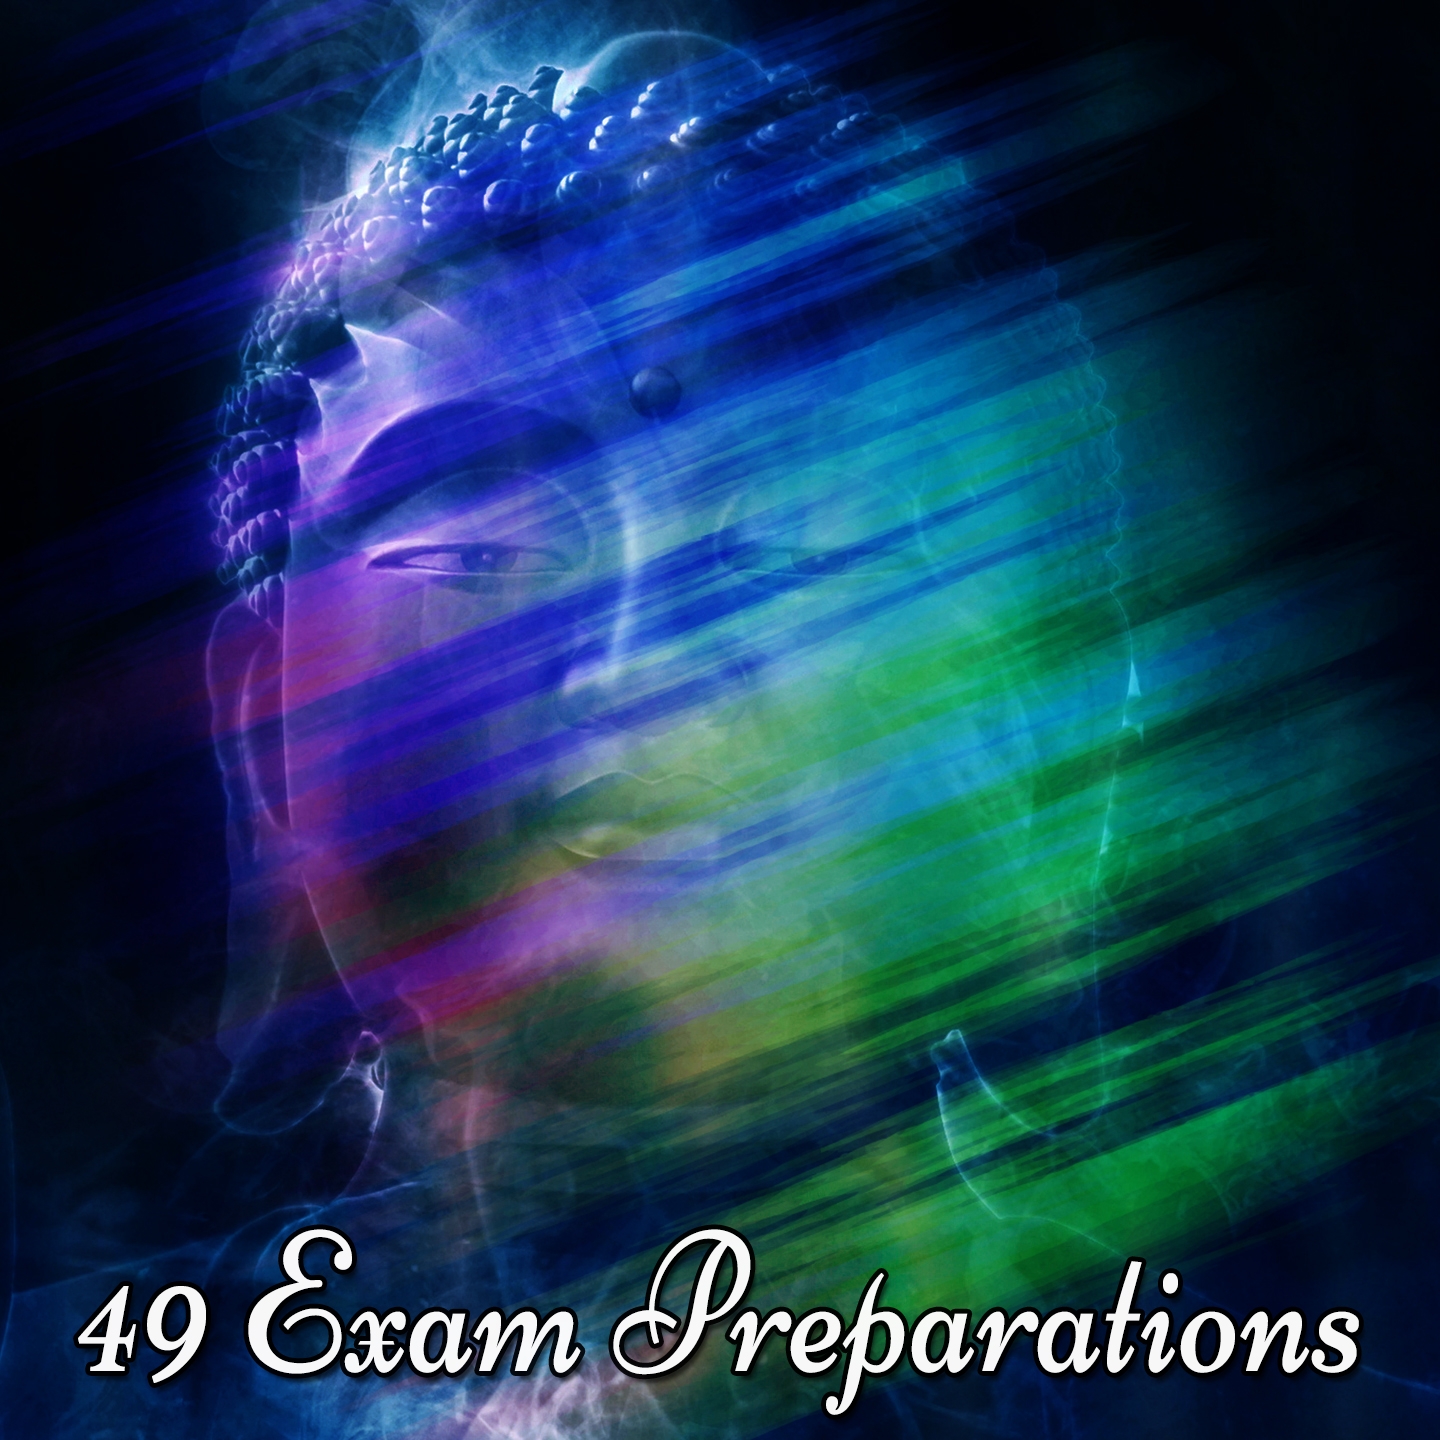 49 Exam Preparations